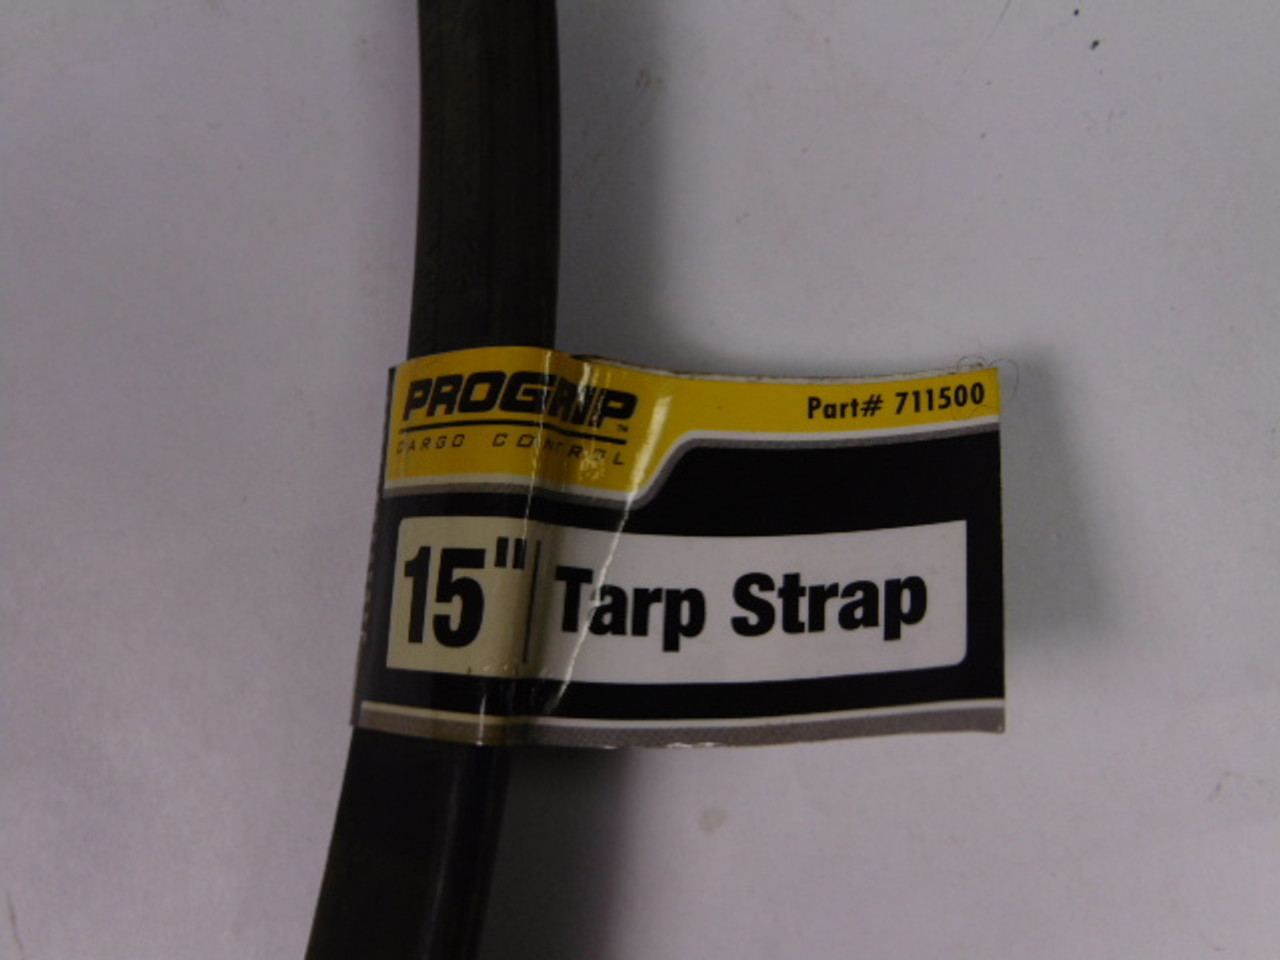 Progrip 711500 15" Tarp Strap USED